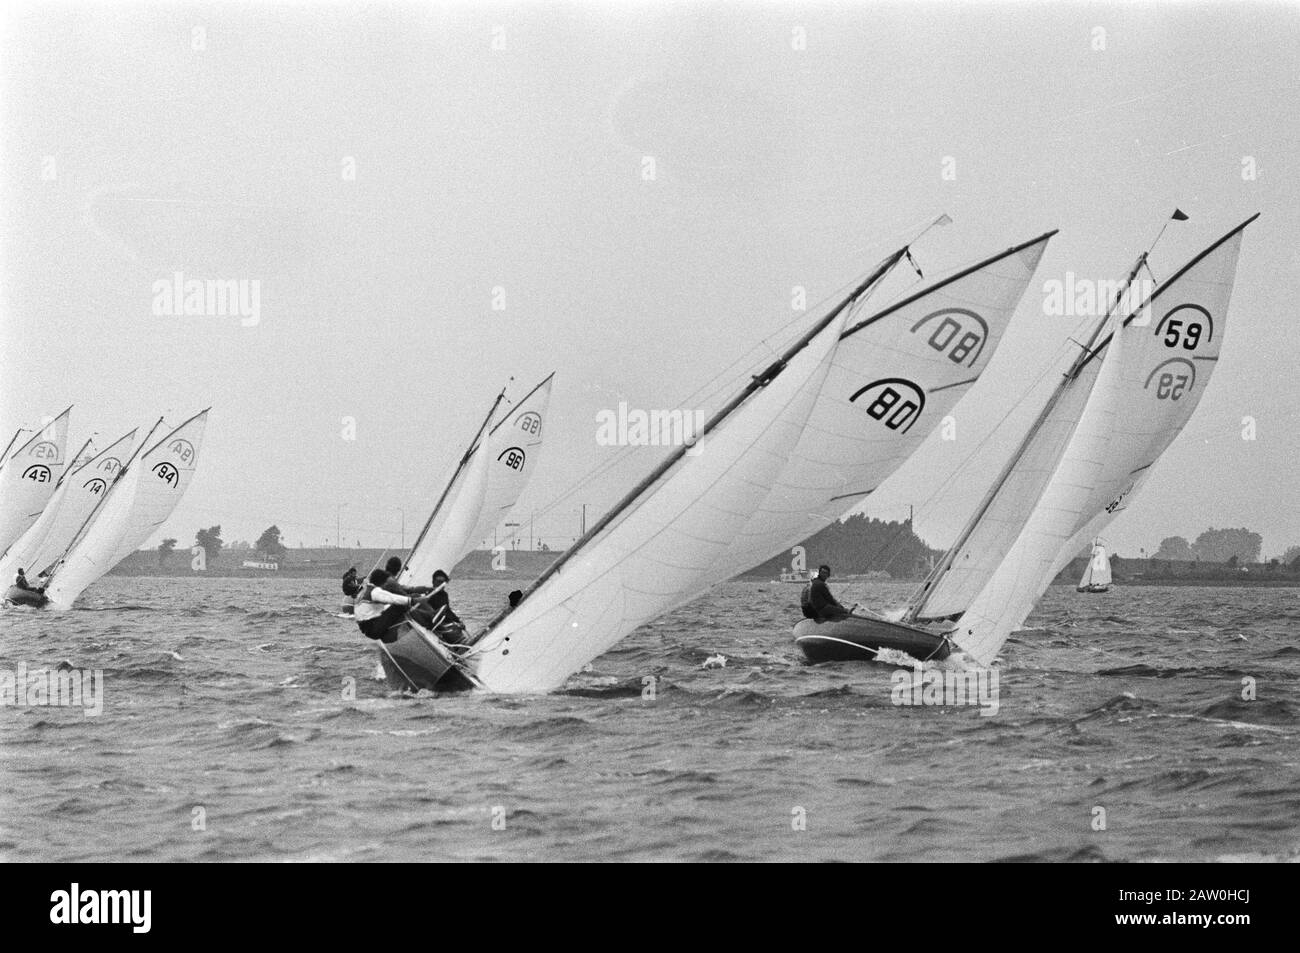 Dutch Championship Sailing, Rainbow Class on Alkmaardermeer, number 59, John Mason Date: July 10, 1976 Location: Alkmaardermeer Keywords: CHAMPIONSHIPS, SAILING Stock Photo